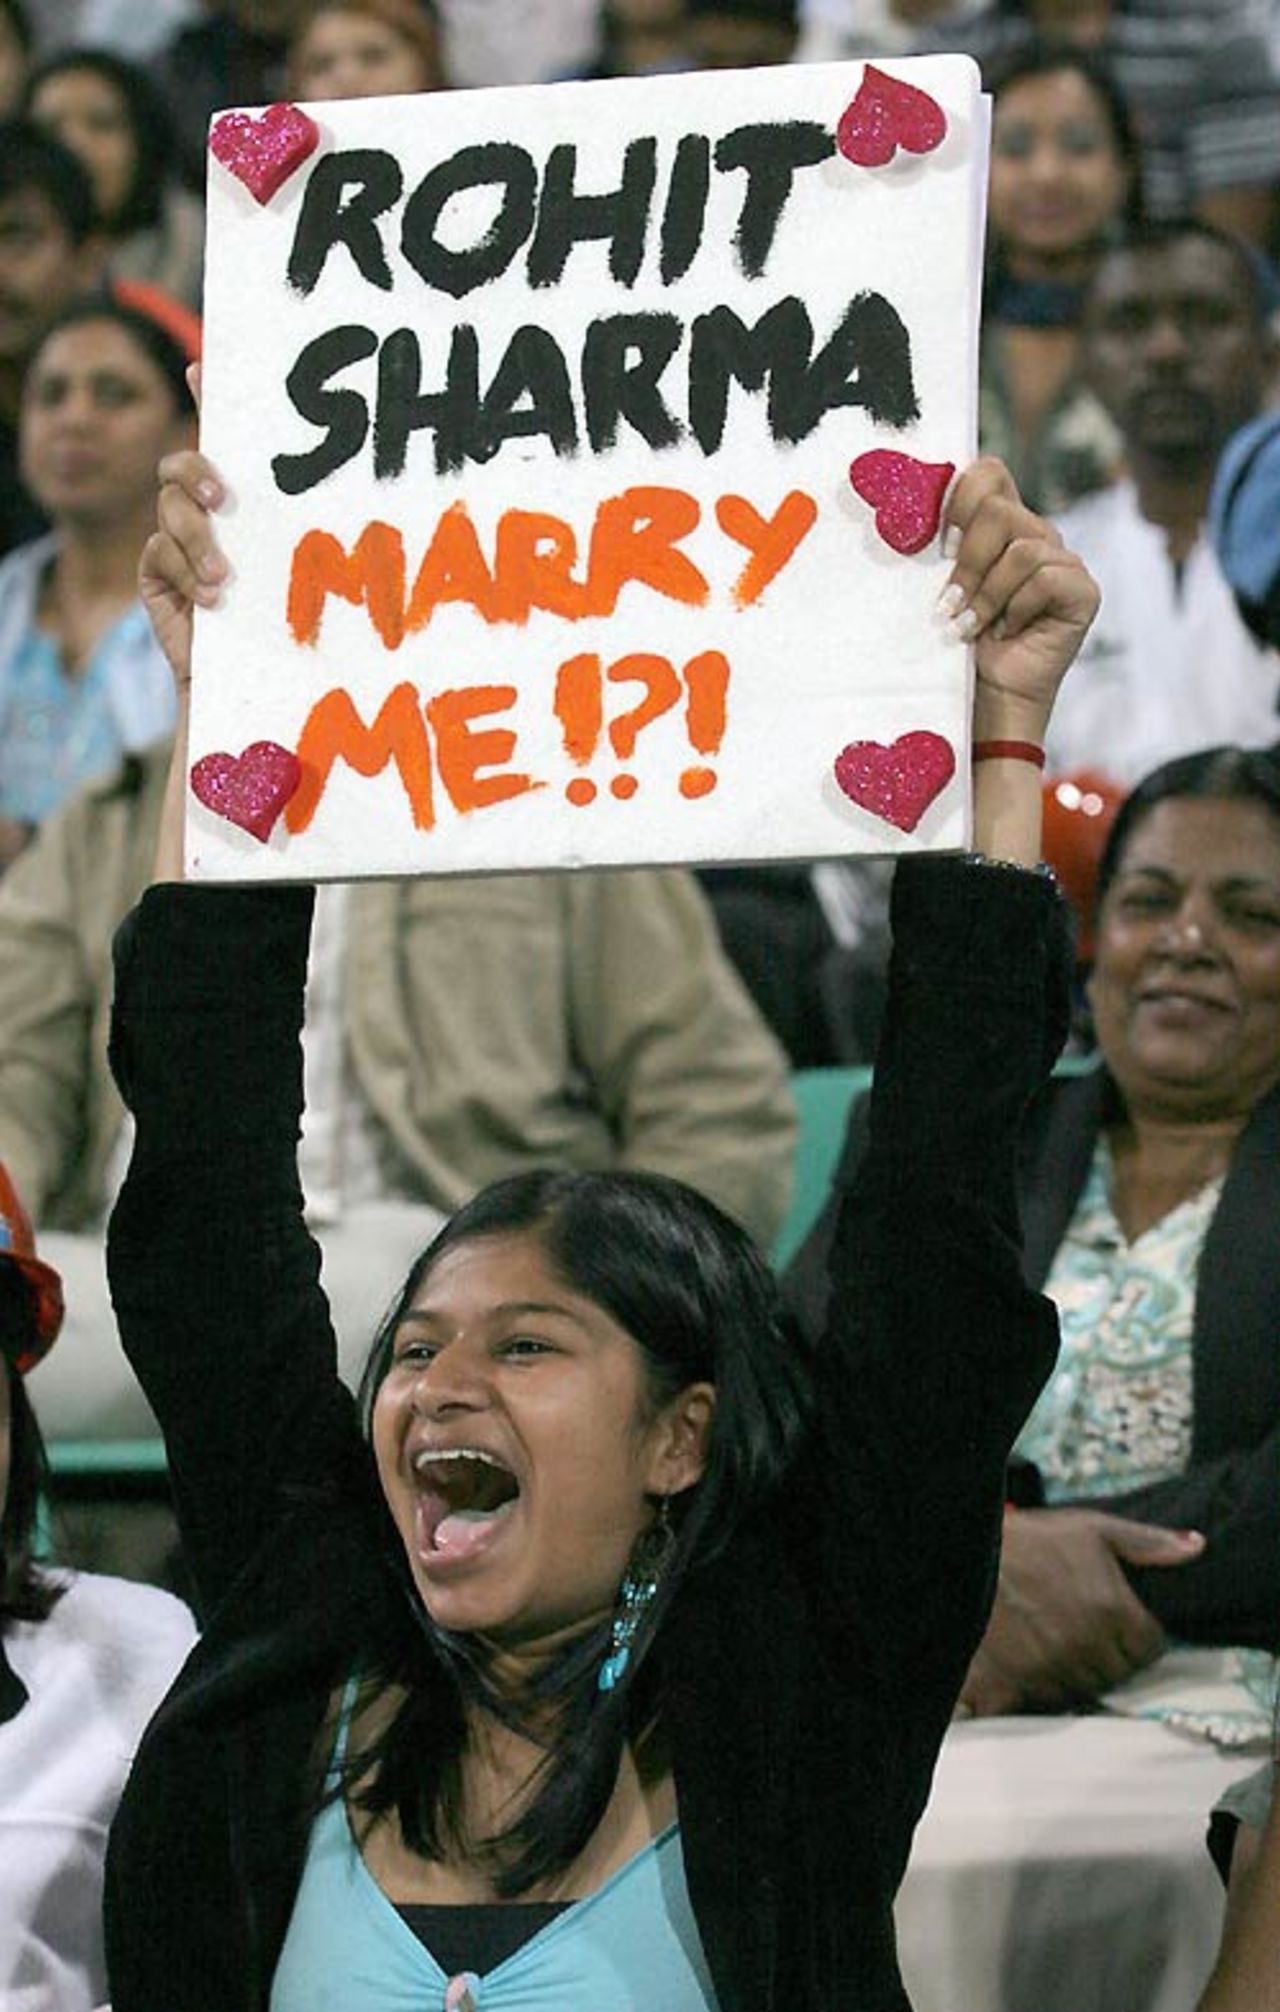 A fan has a message for Rohit Sharma, Australia v India, 2nd semi-final, ICC World Twenty20, Durban, September 22, 2007